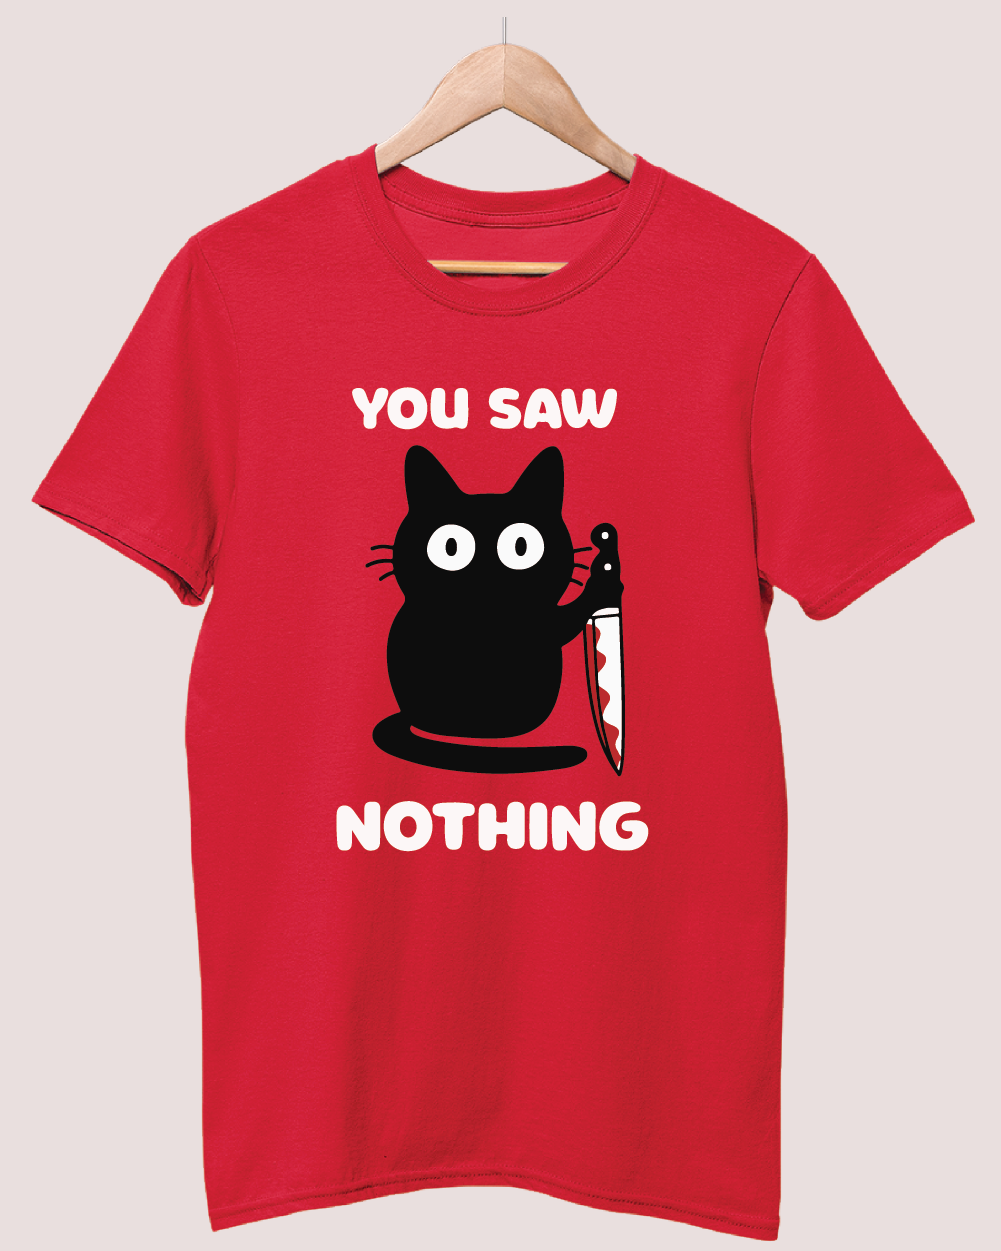 You saw nothing t-shirt